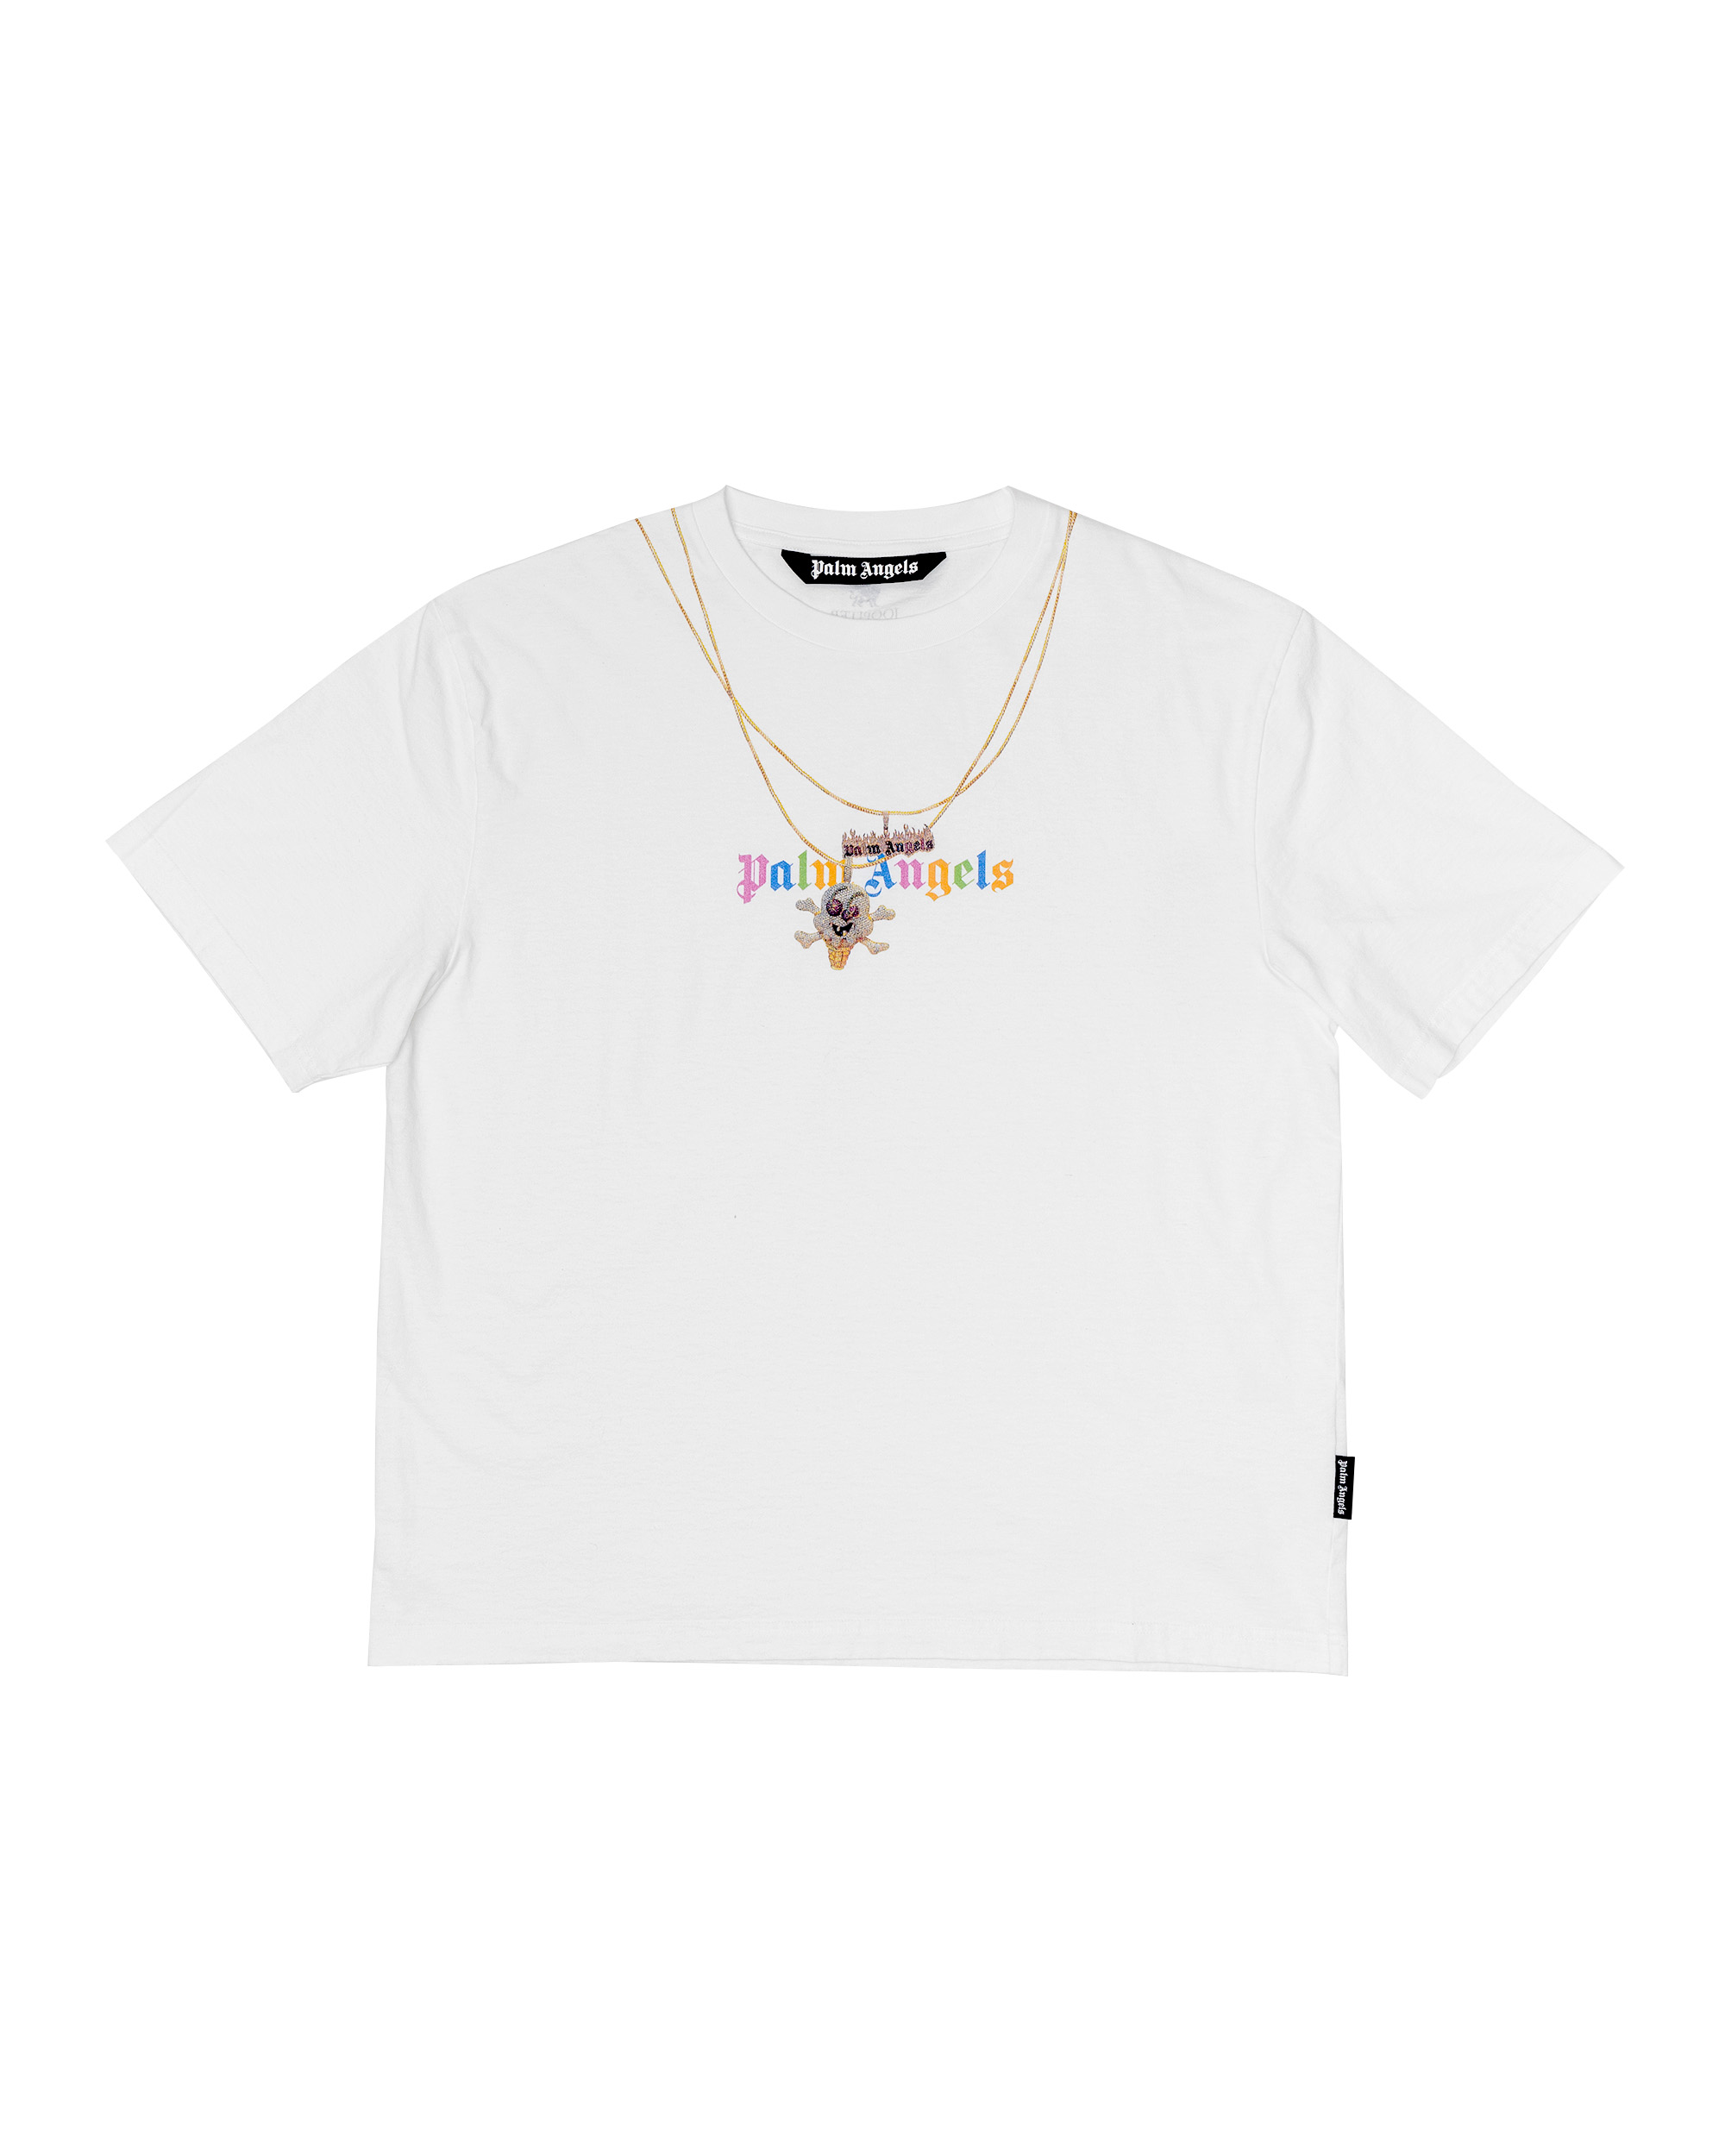 Palm Angels Rainbow T-Shirt